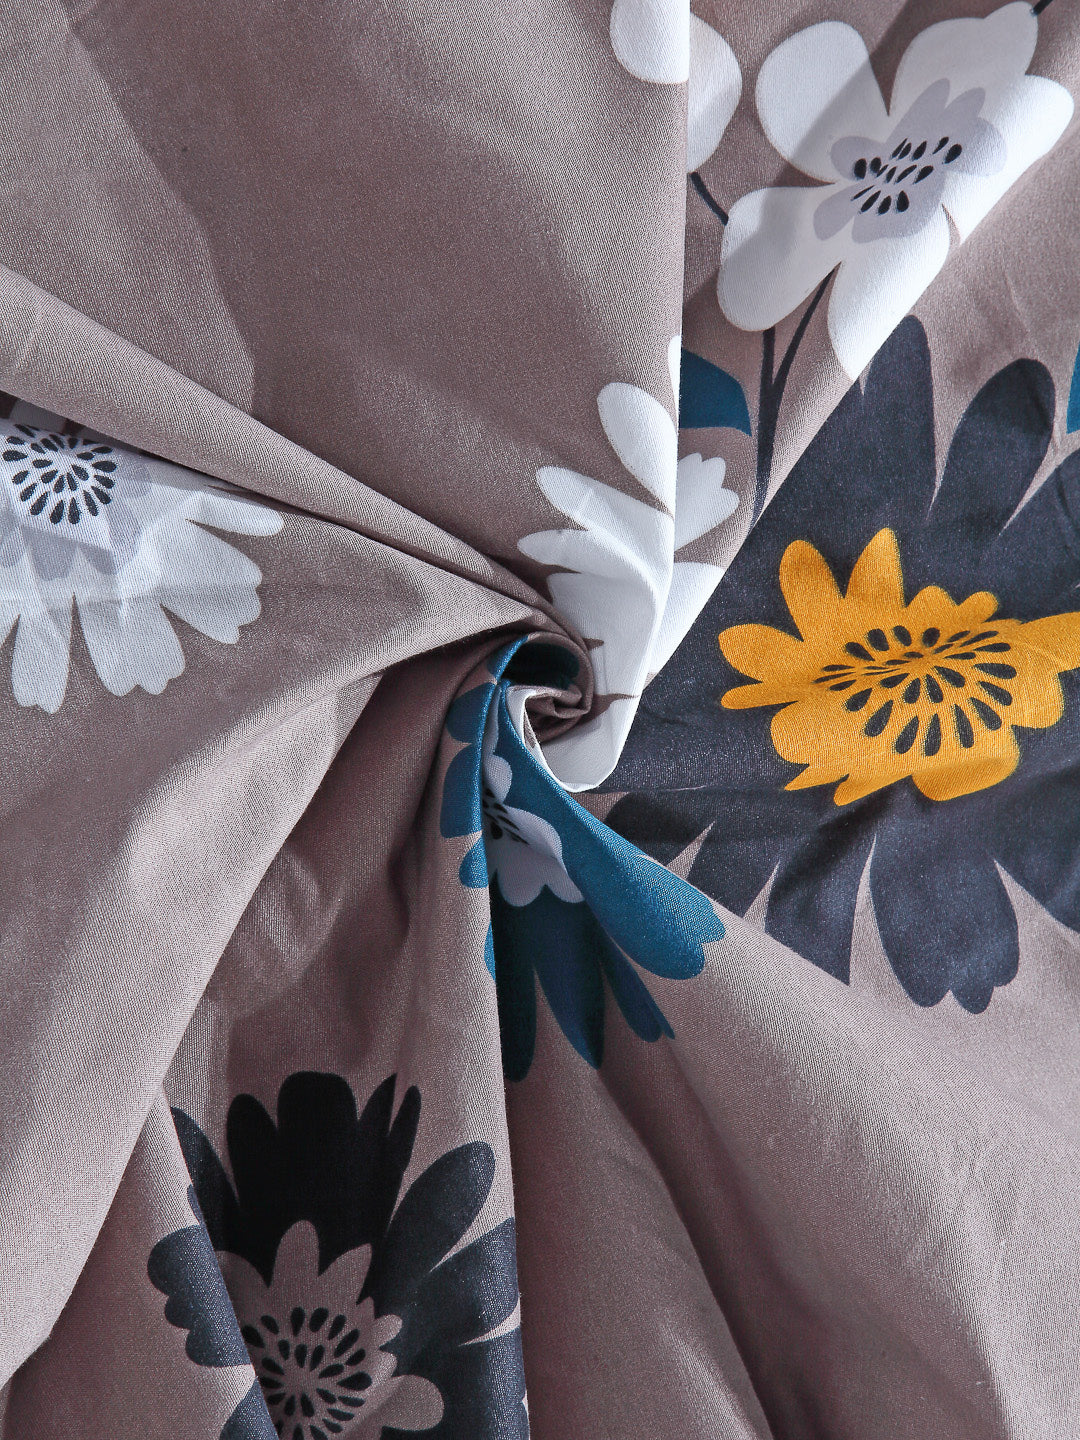 Arrabi Brown Floral TC Cotton Blend Single Size Bedsheet with 1 Pillow Cover (220 x 150 cm)